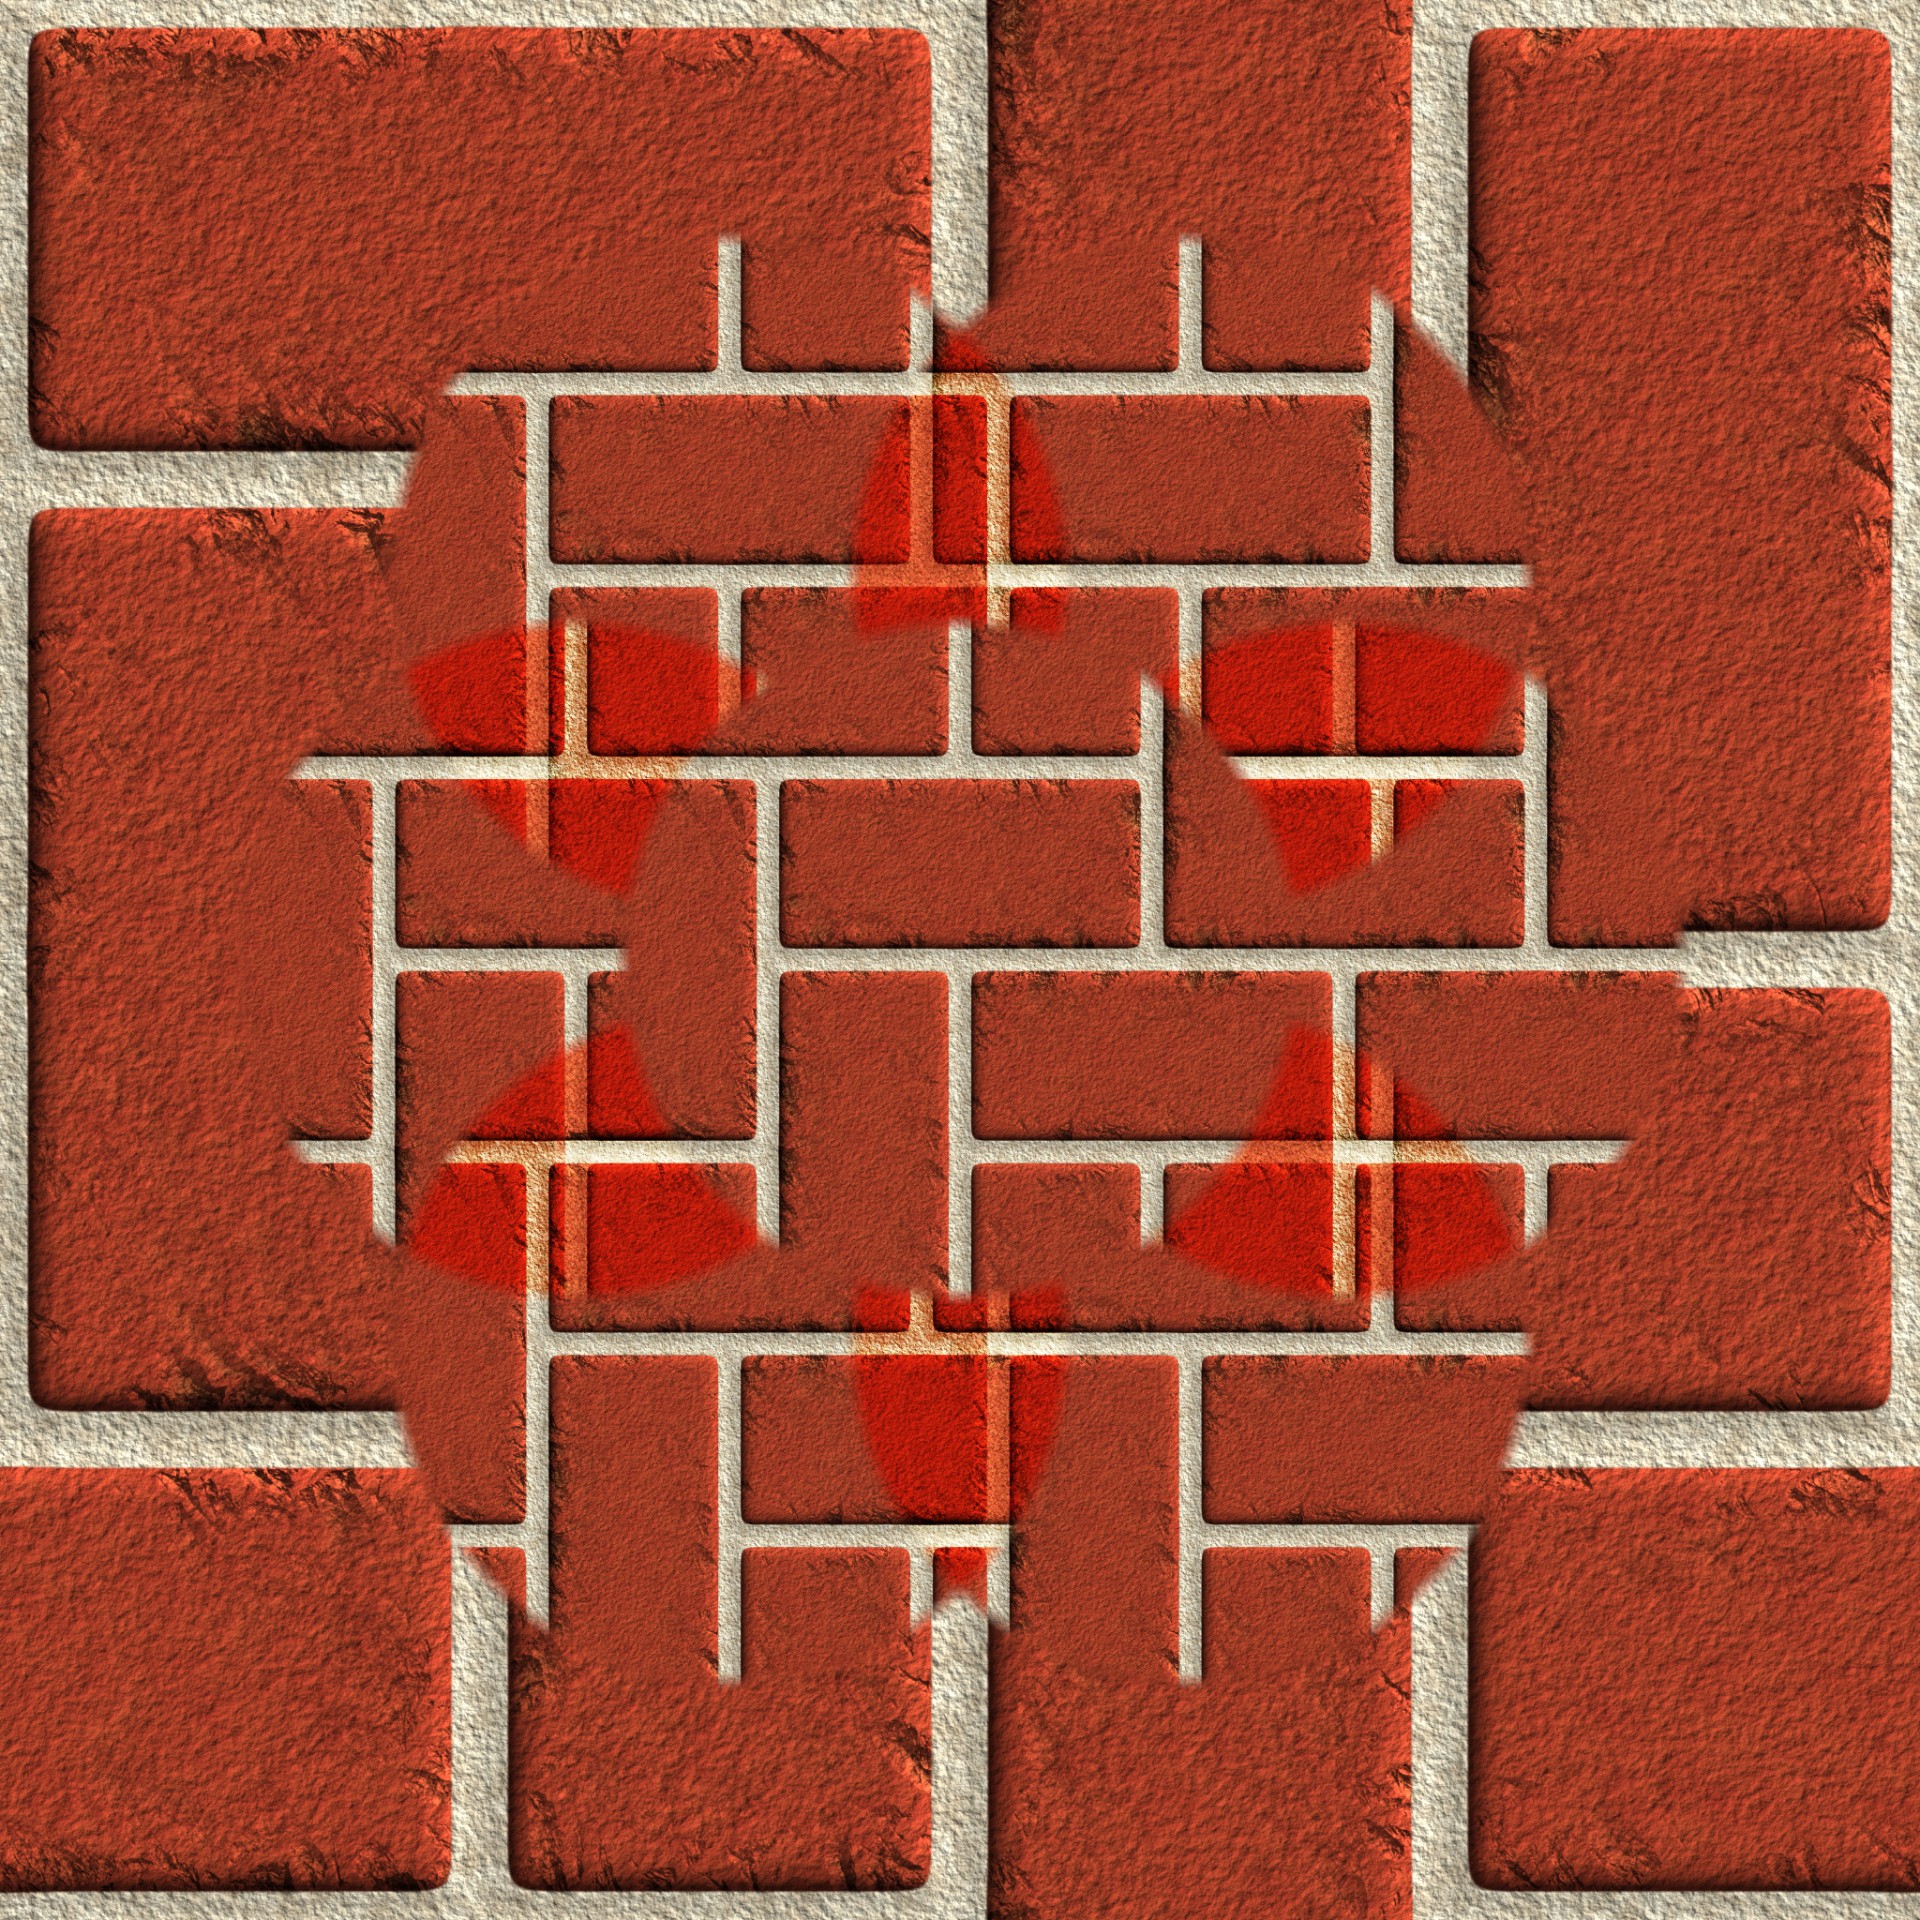 bricks abstract pattern free photo